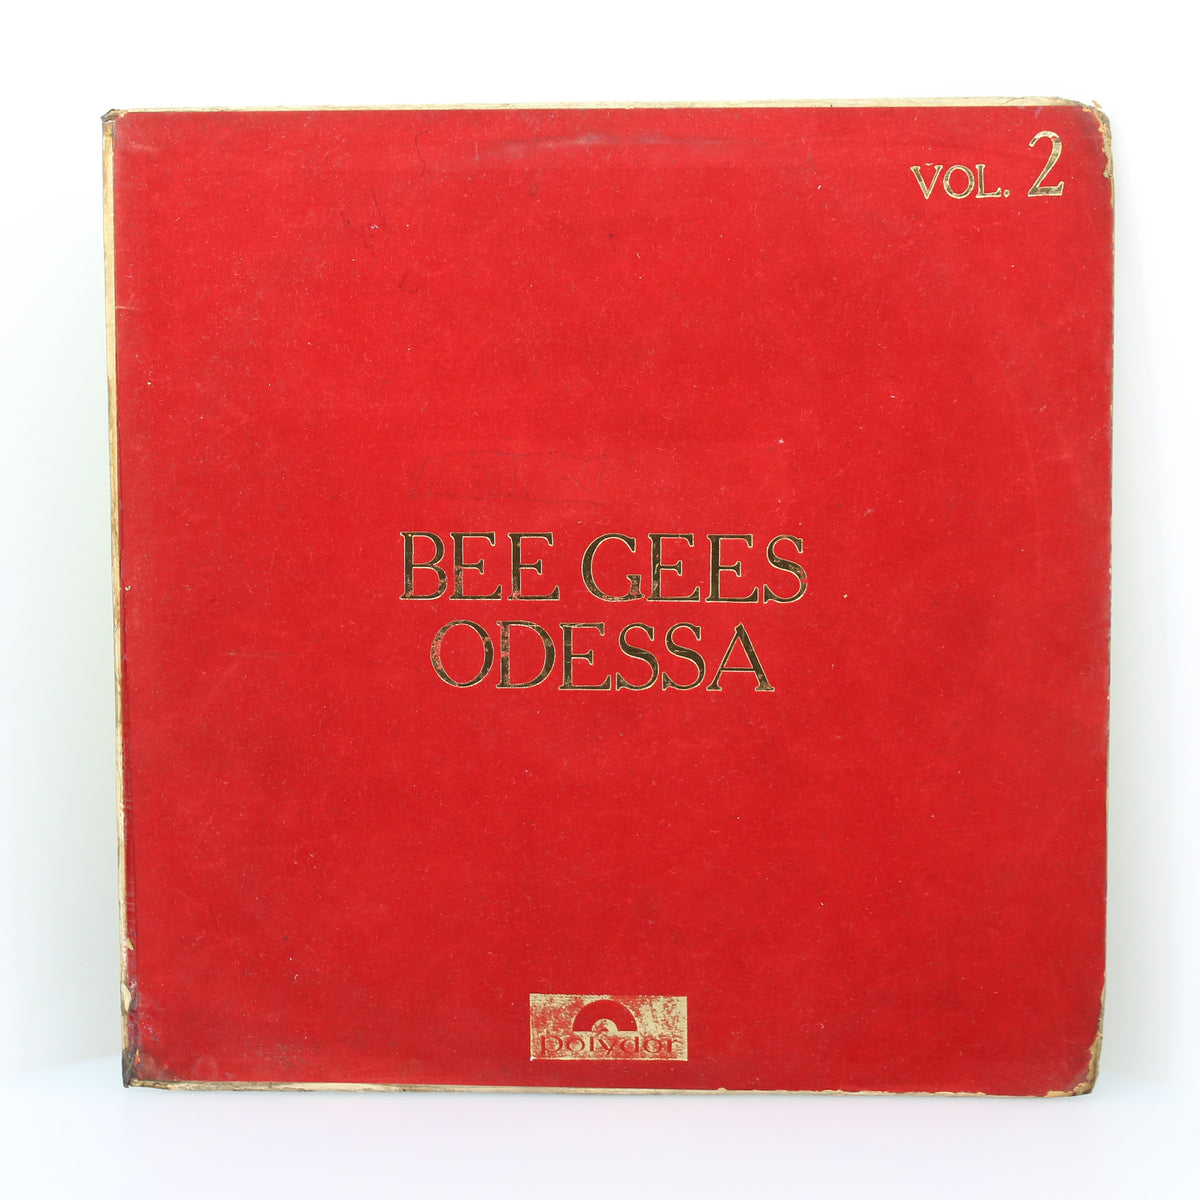 Bee Gees - Odessa, Vinyl, LP Album 33Rpm, Phillippines 1969